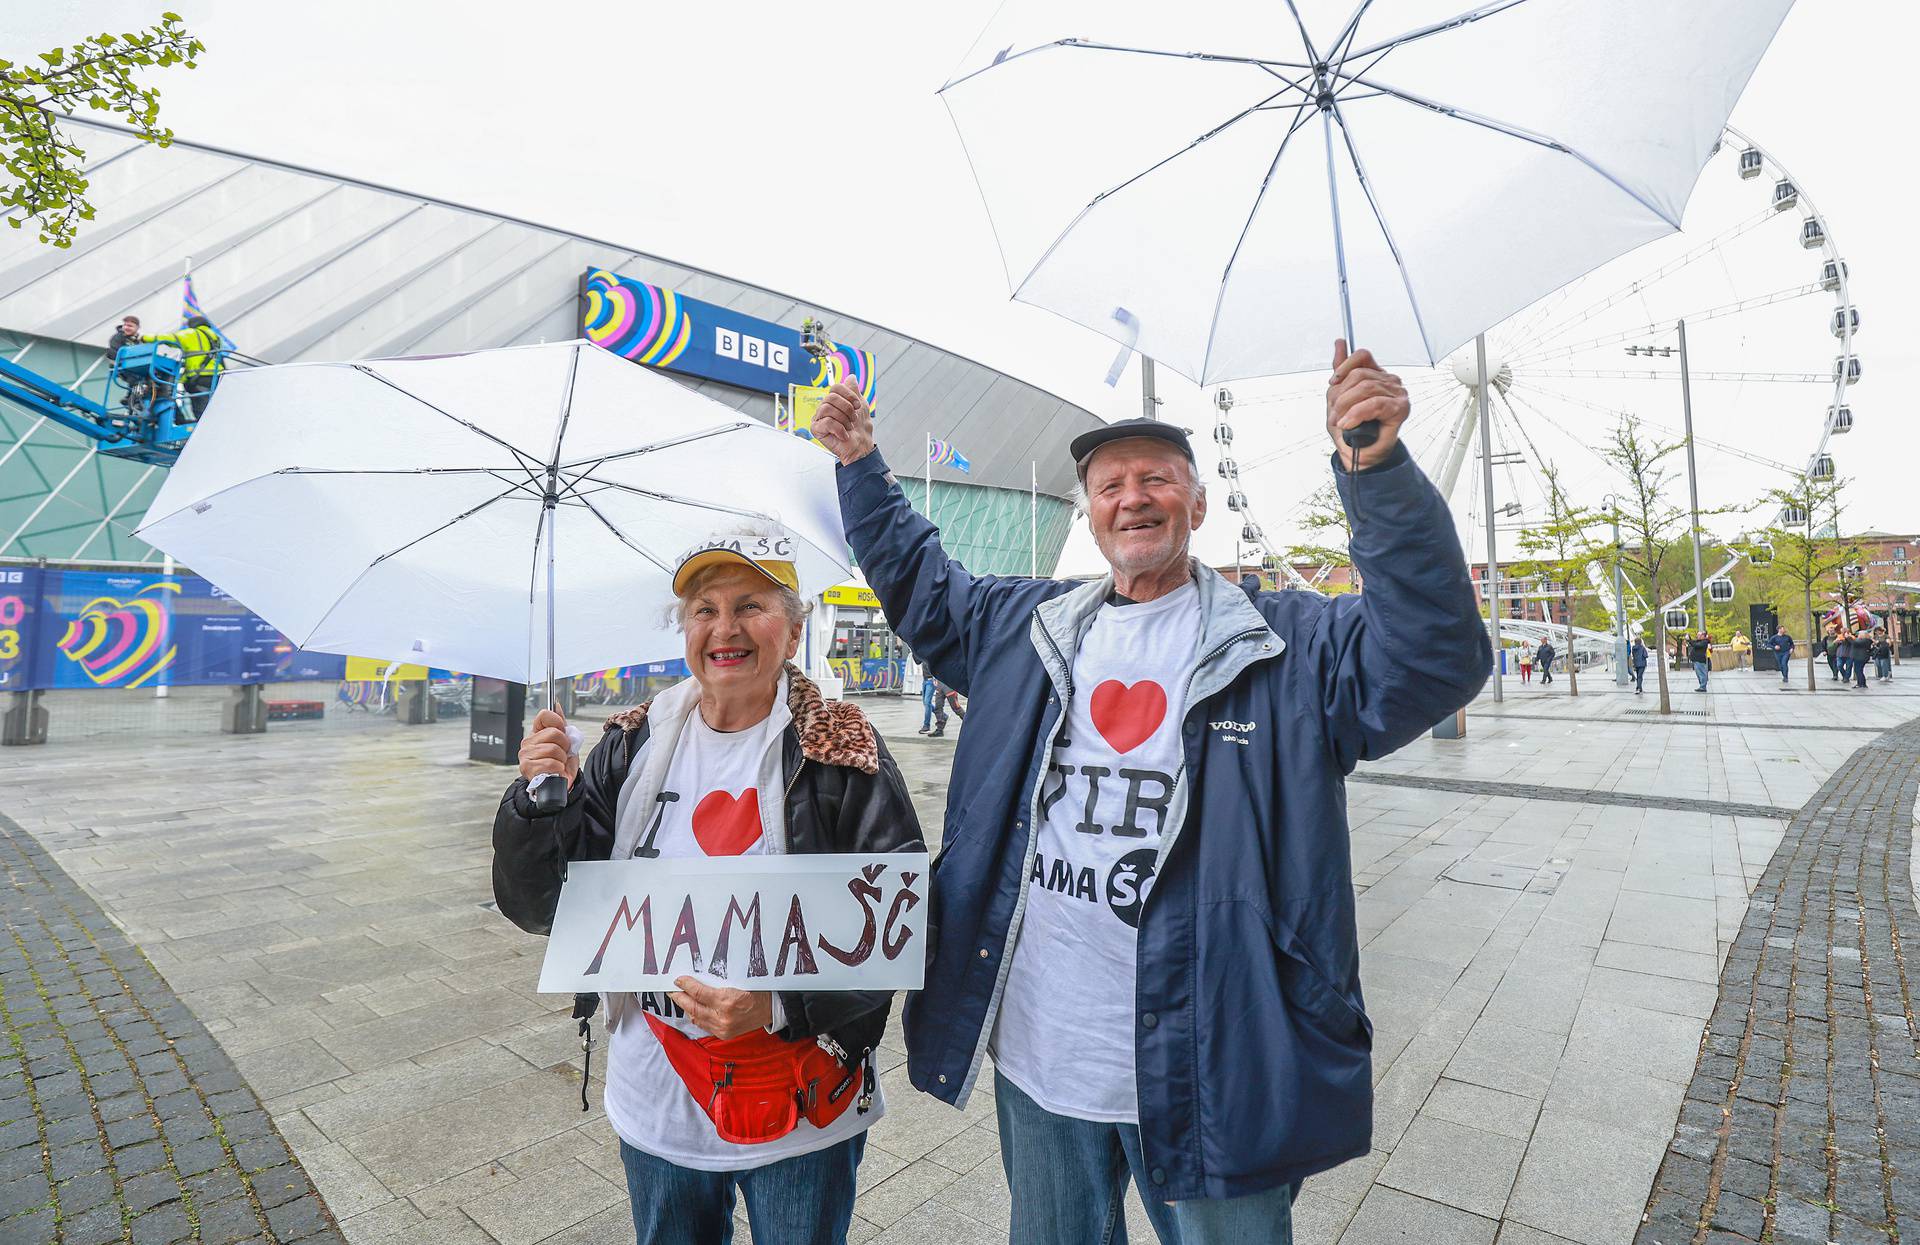 Marica i Mijat s otoka Vira stigli u Liverpool bodriti Let3 na Eurosongu